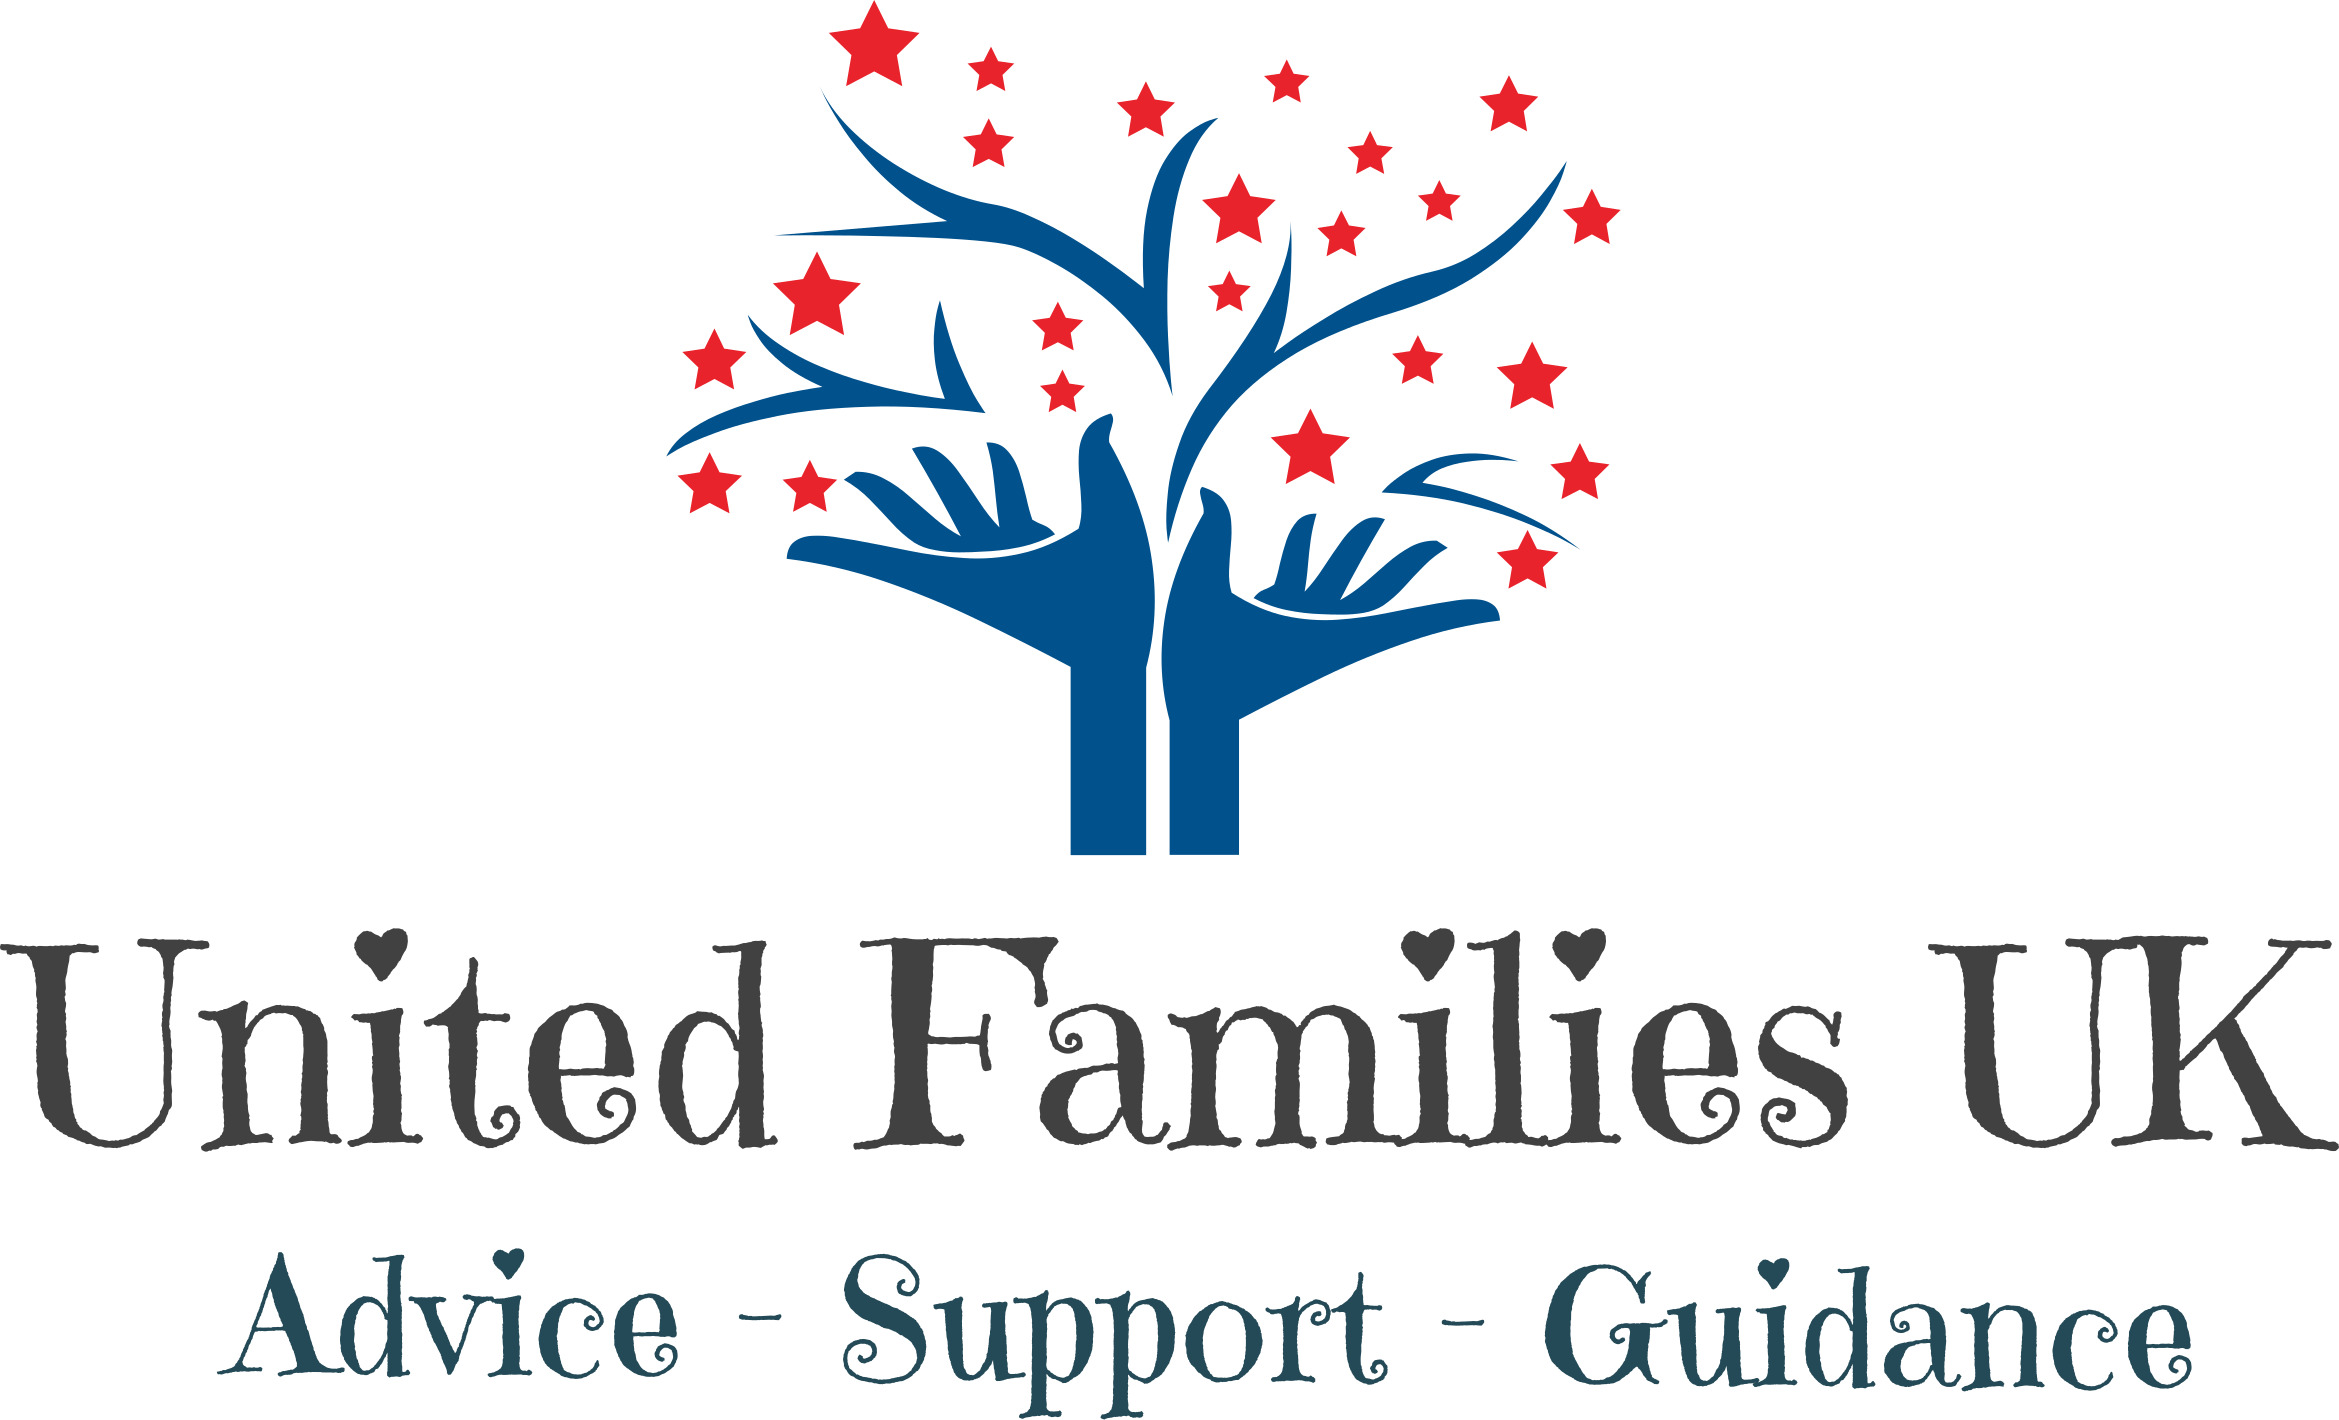 Funding success – United Families UK